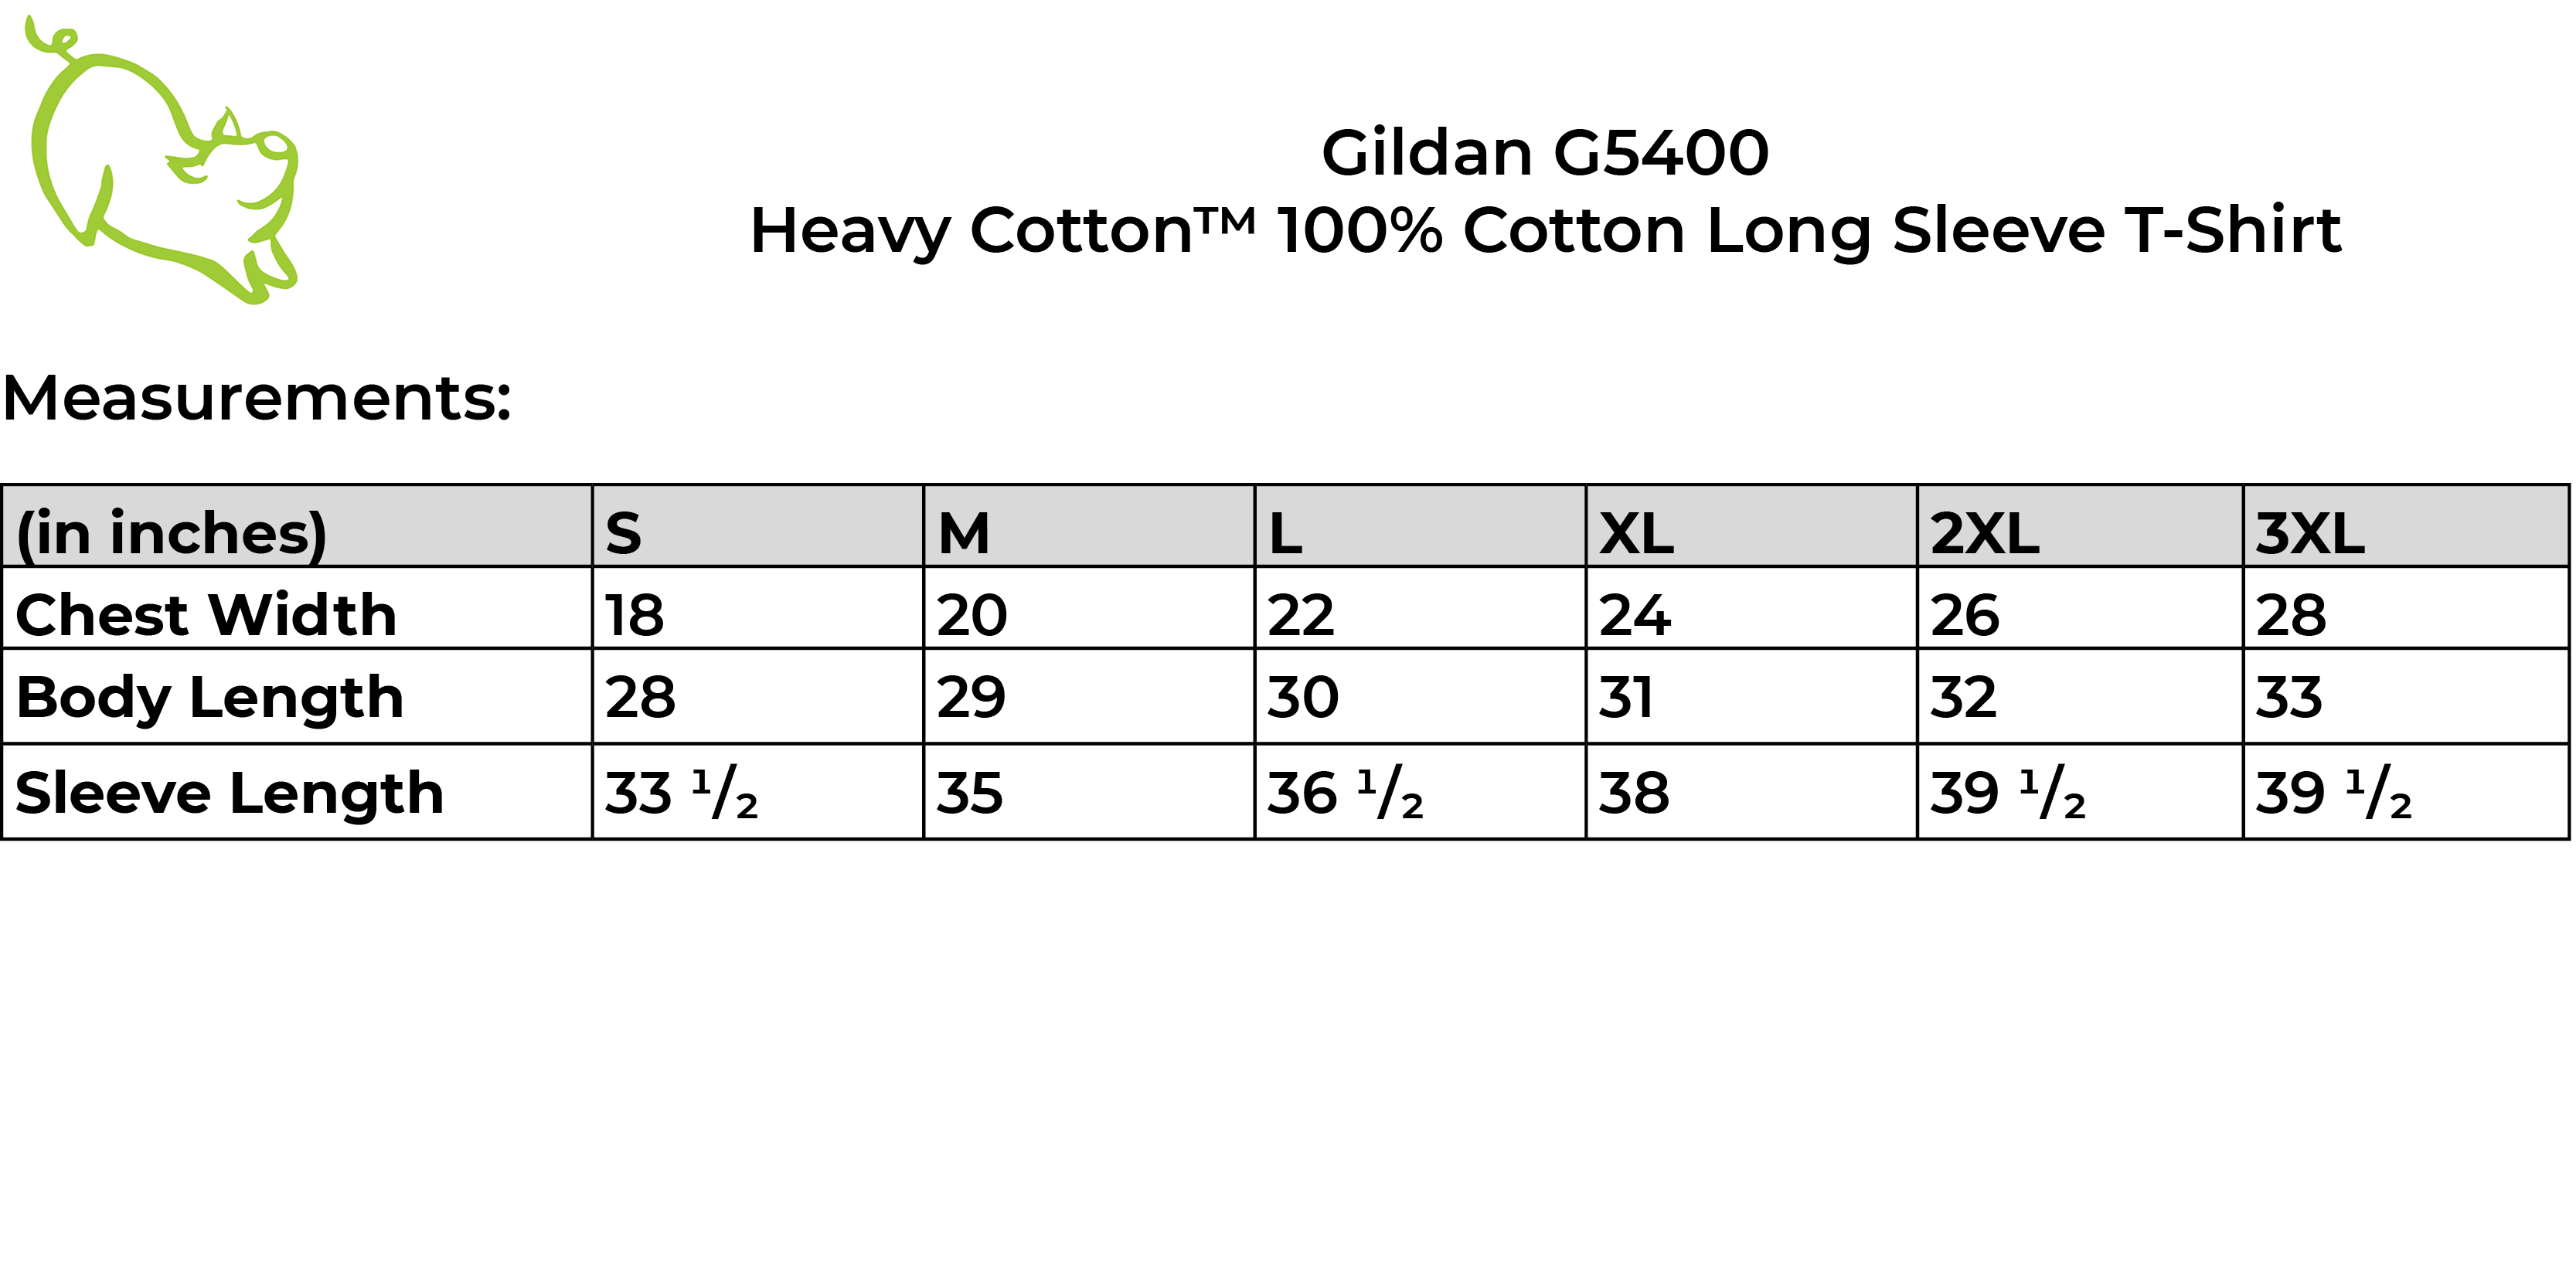 Gildan G5400 size guide